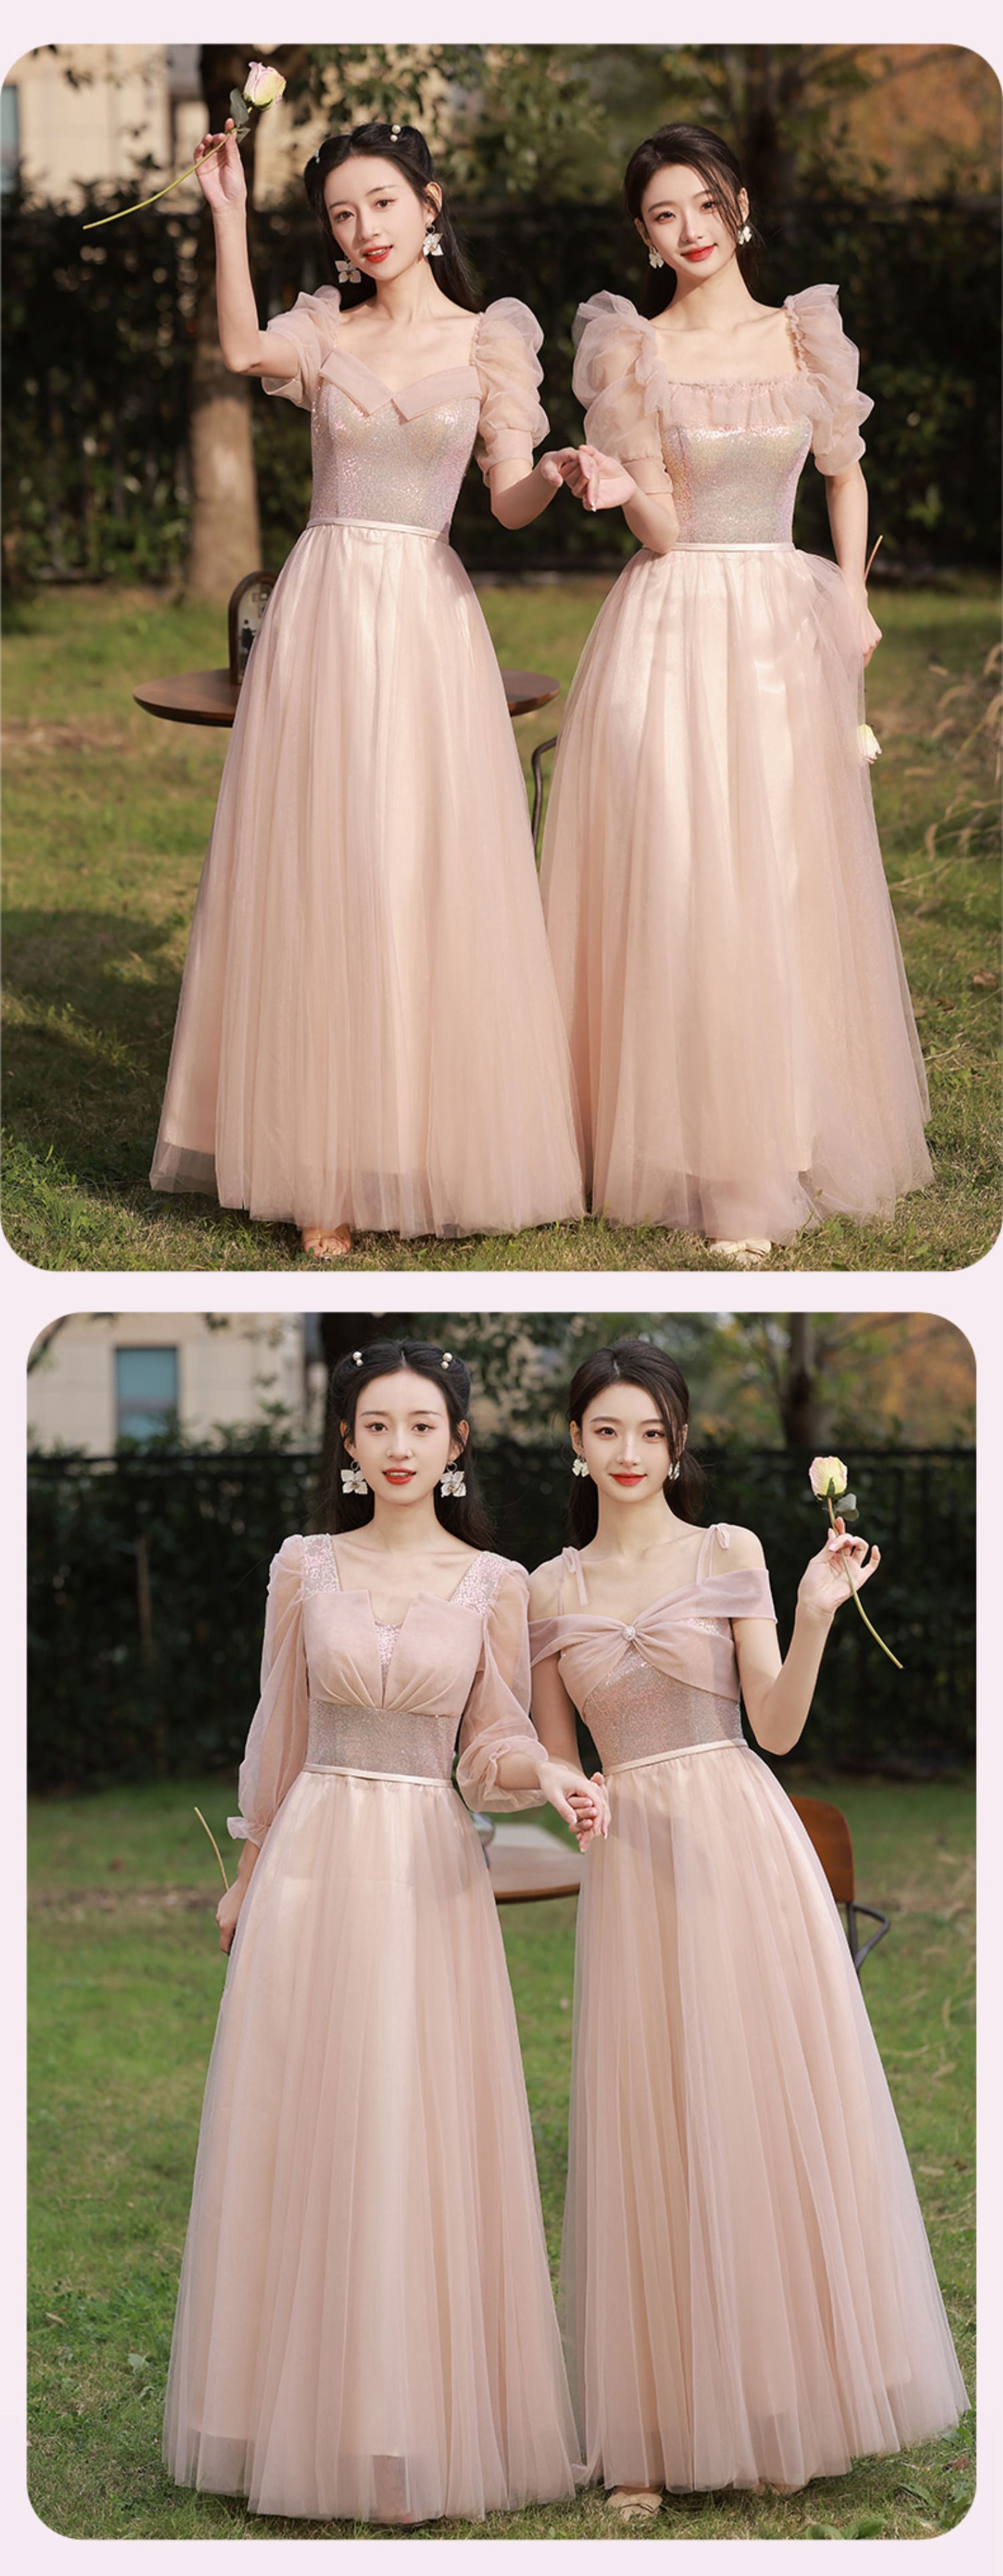 Elegant-Pink-Maxi-Dress-for-Prom-Wedding-Bridesmaid-Birthday-Party17.jpg